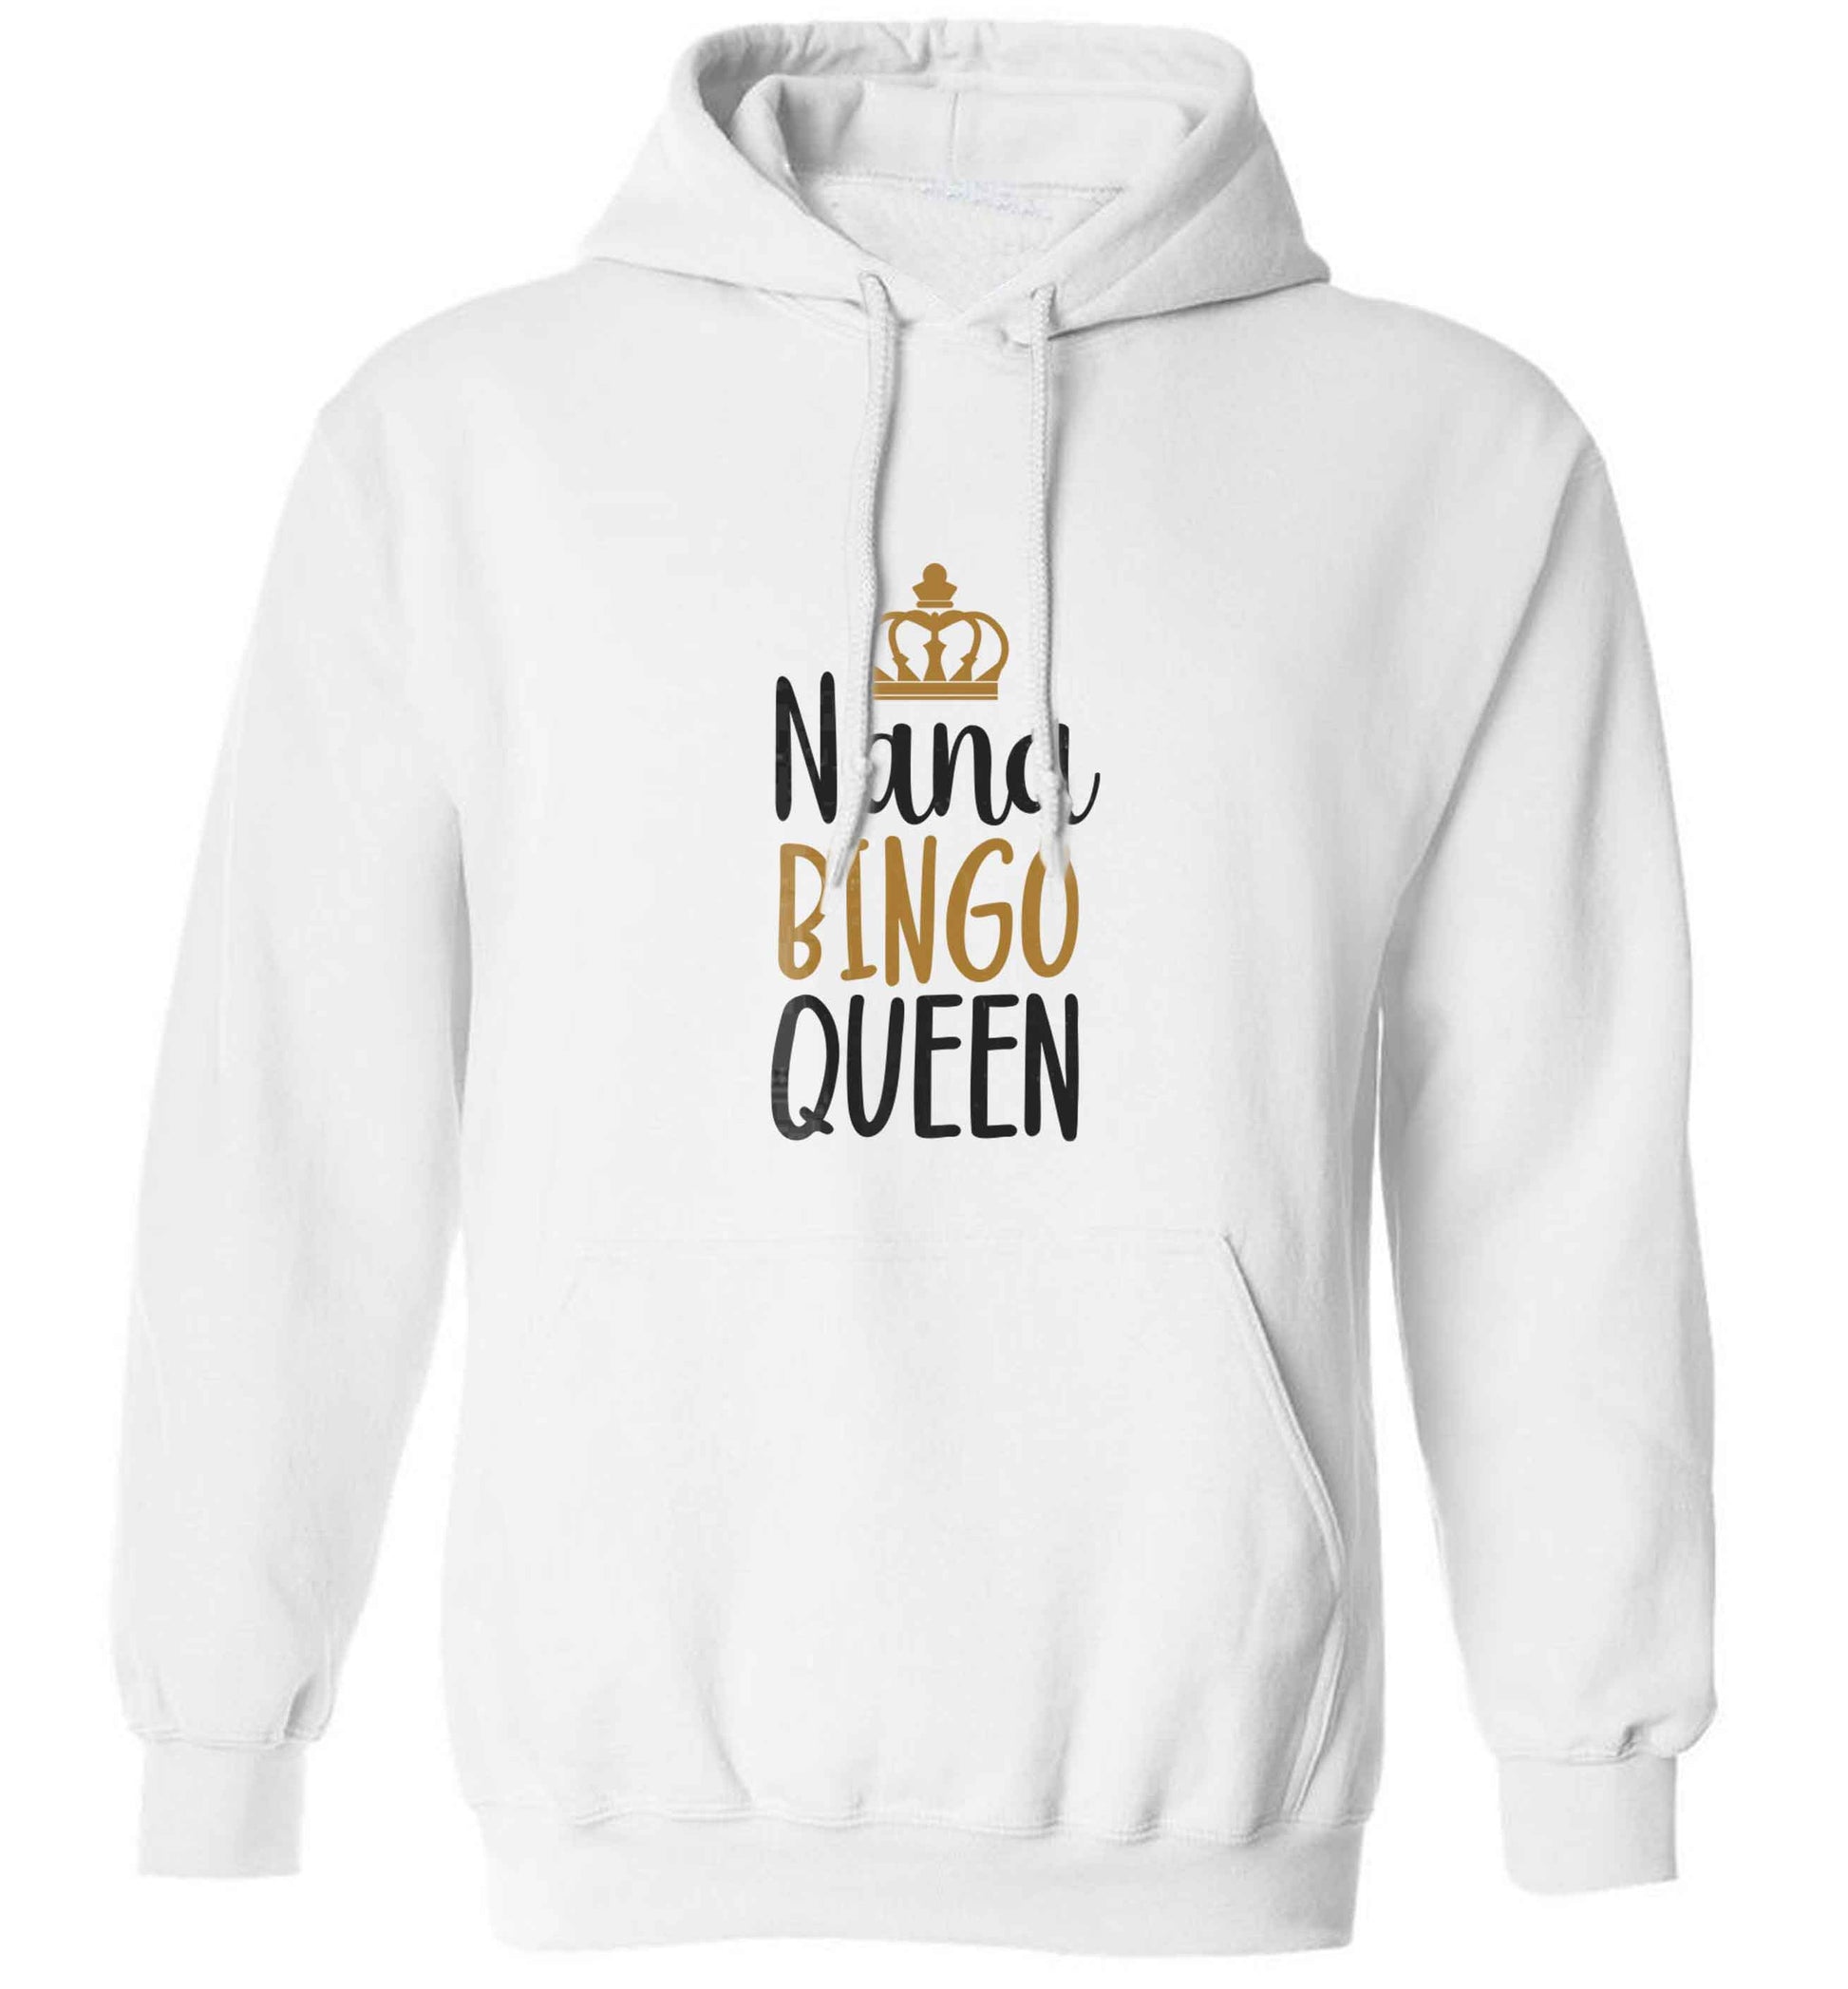 Personalised bingo queen adults unisex white hoodie 2XL